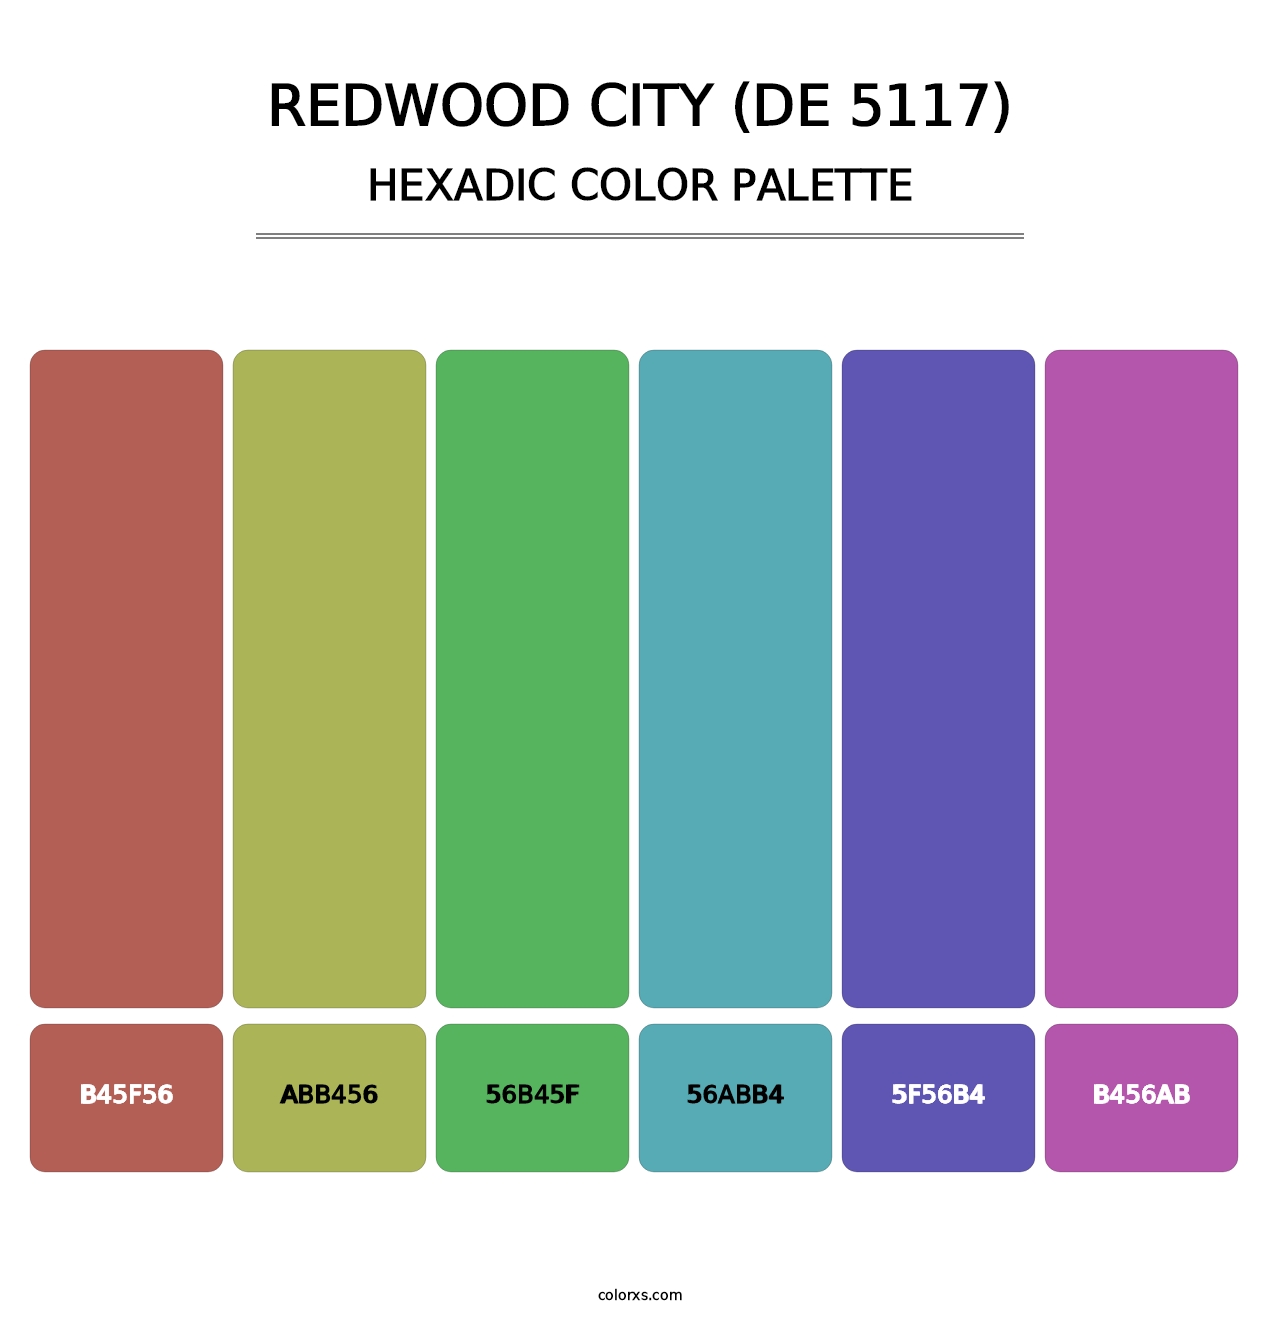 Redwood City (DE 5117) - Hexadic Color Palette